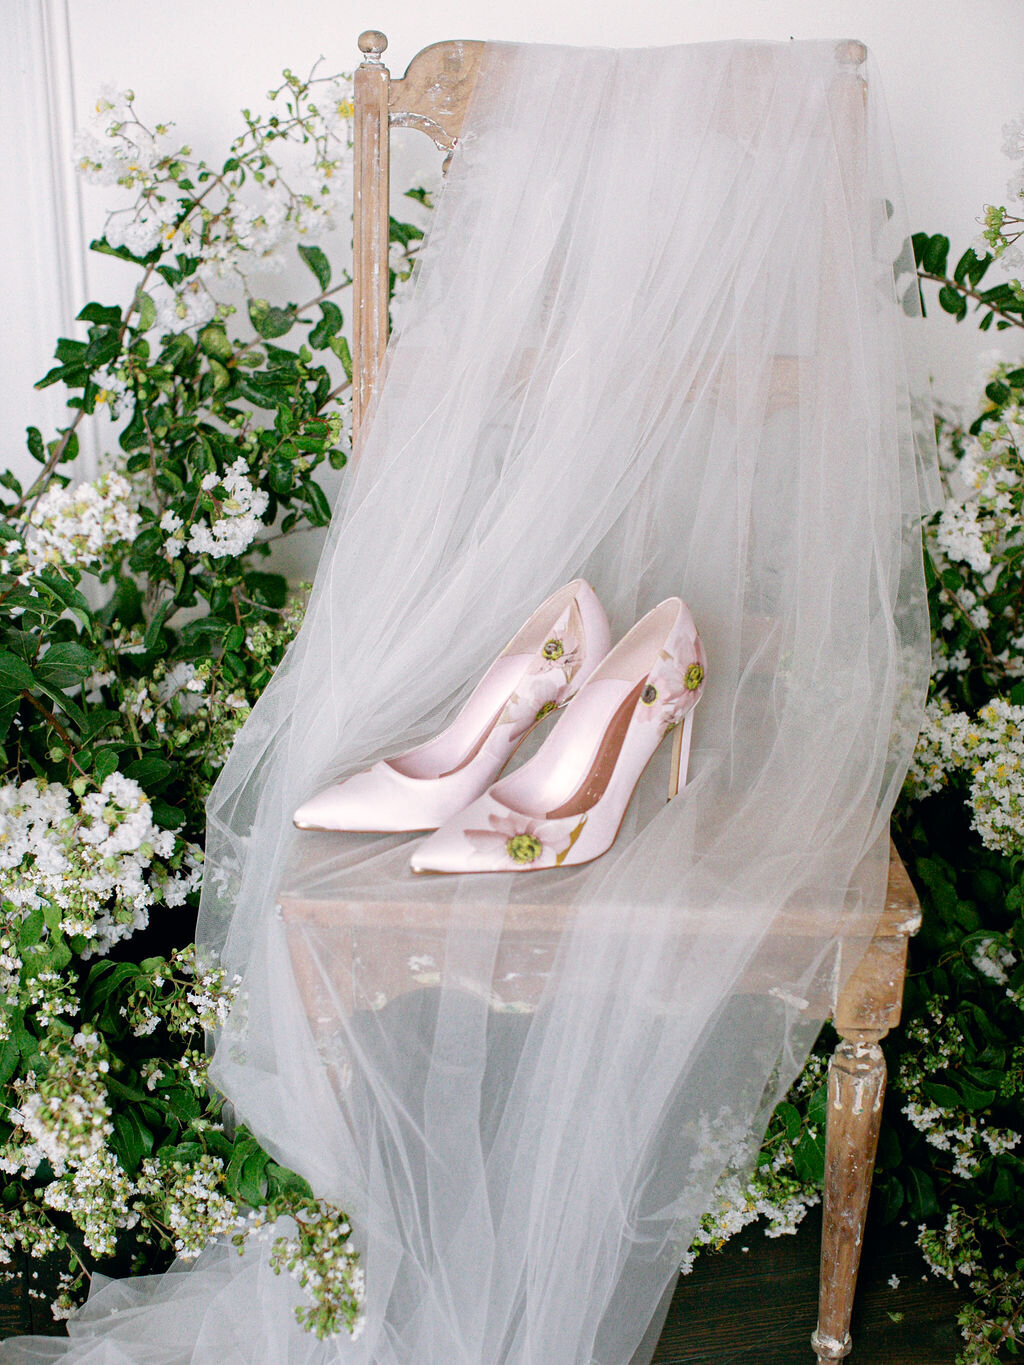 max-owens-design-english-floral-wedding-15-shoes-veil